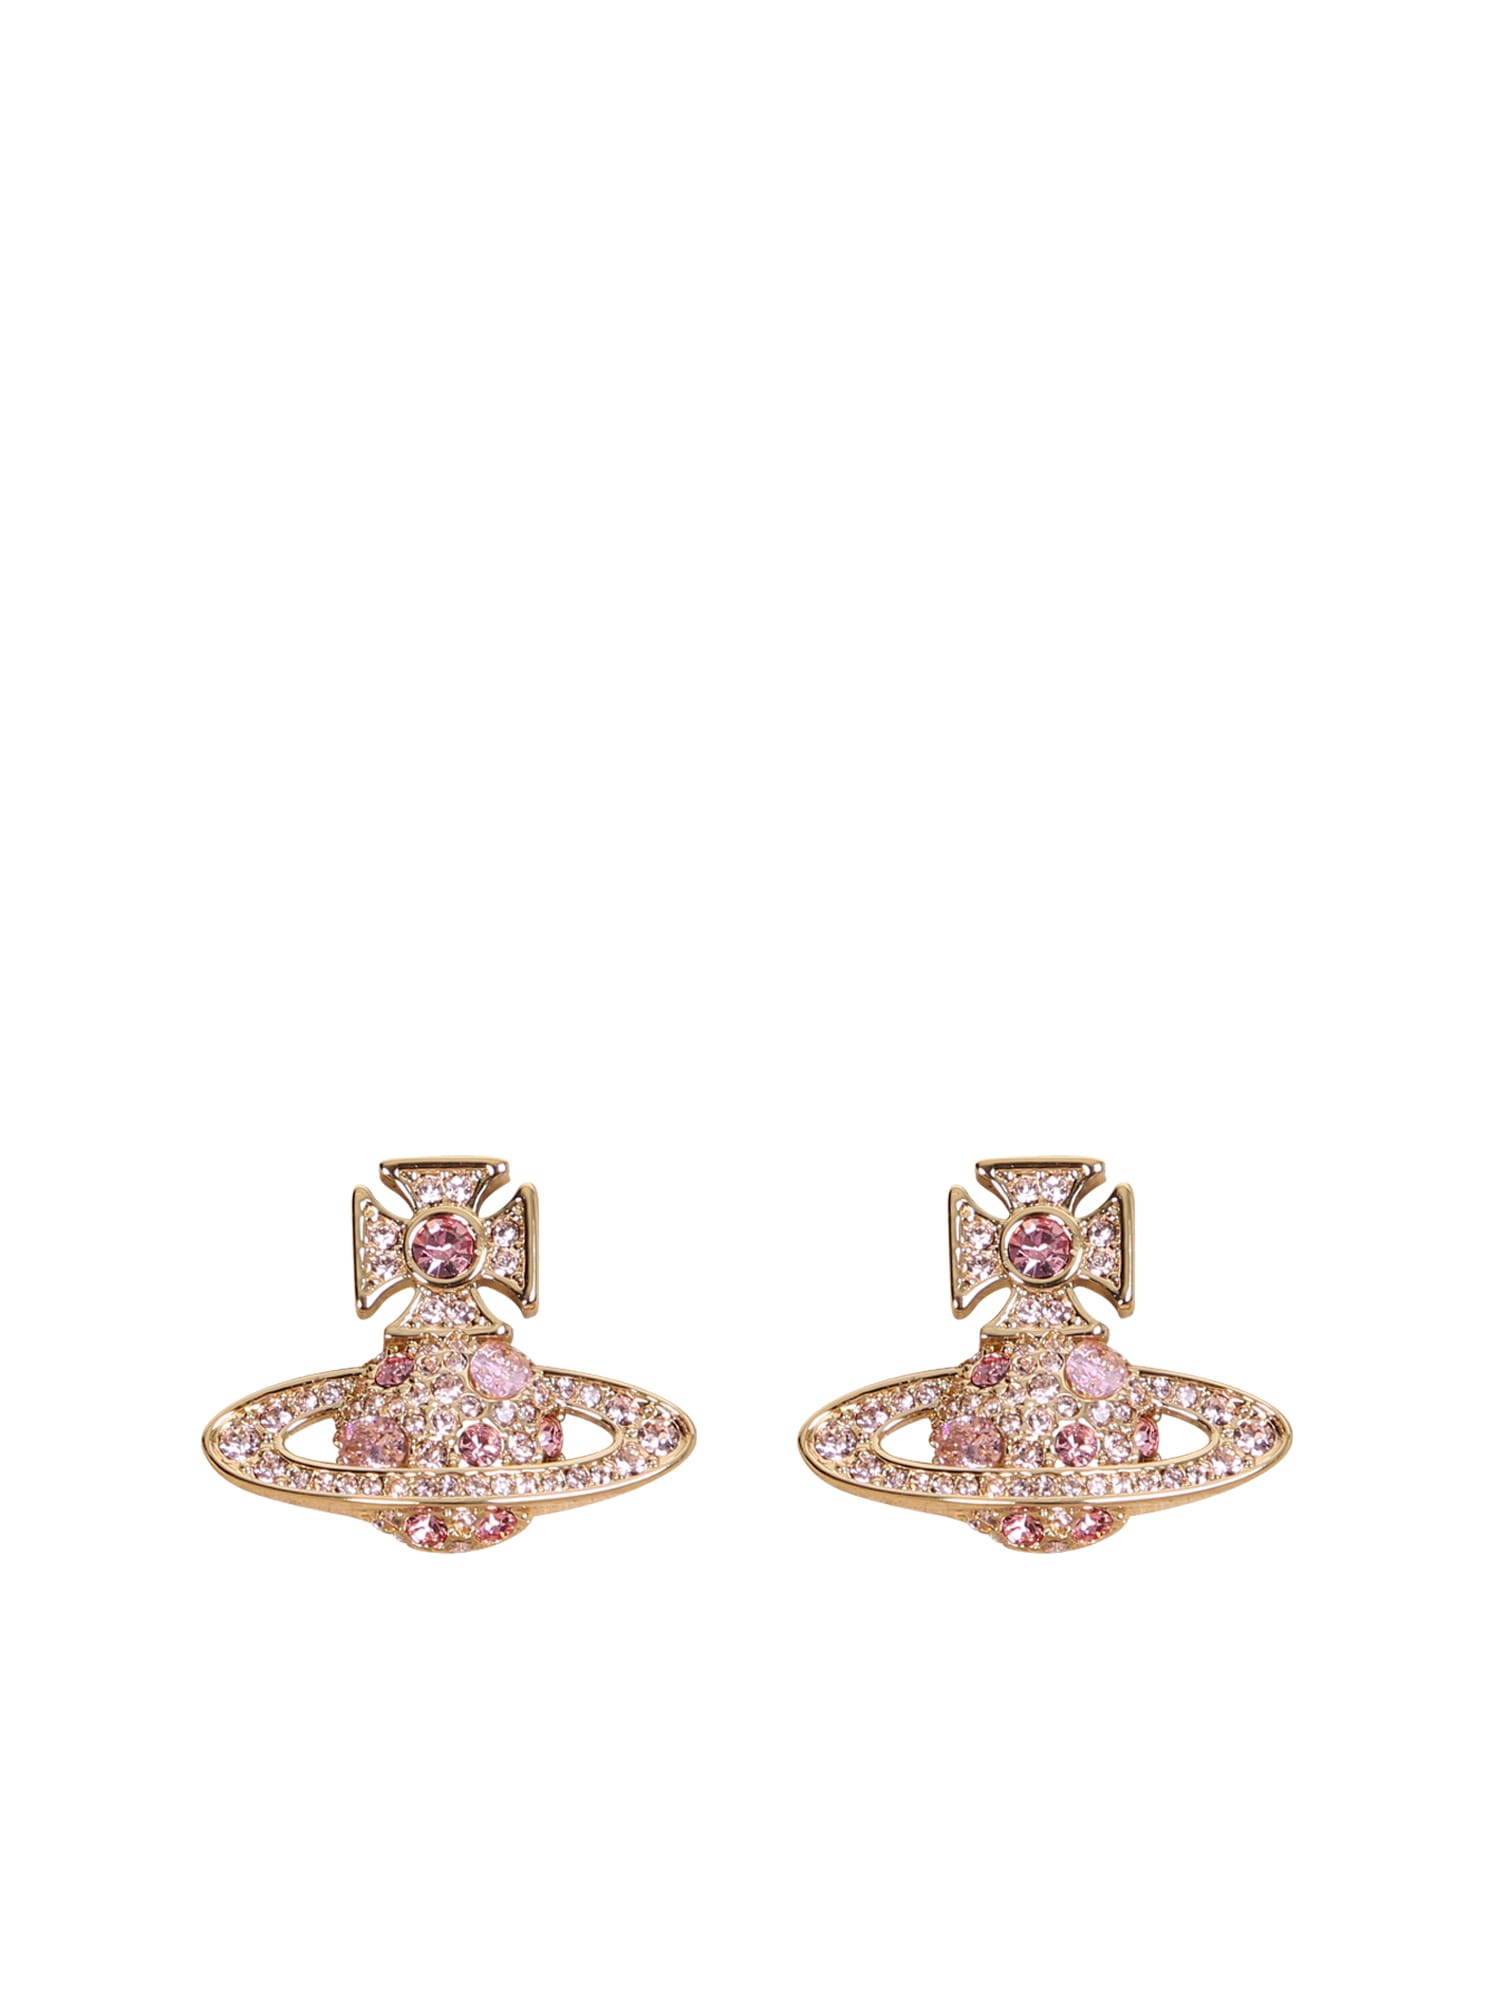 Vivienne Westwood Rose Gold Francette Earrings